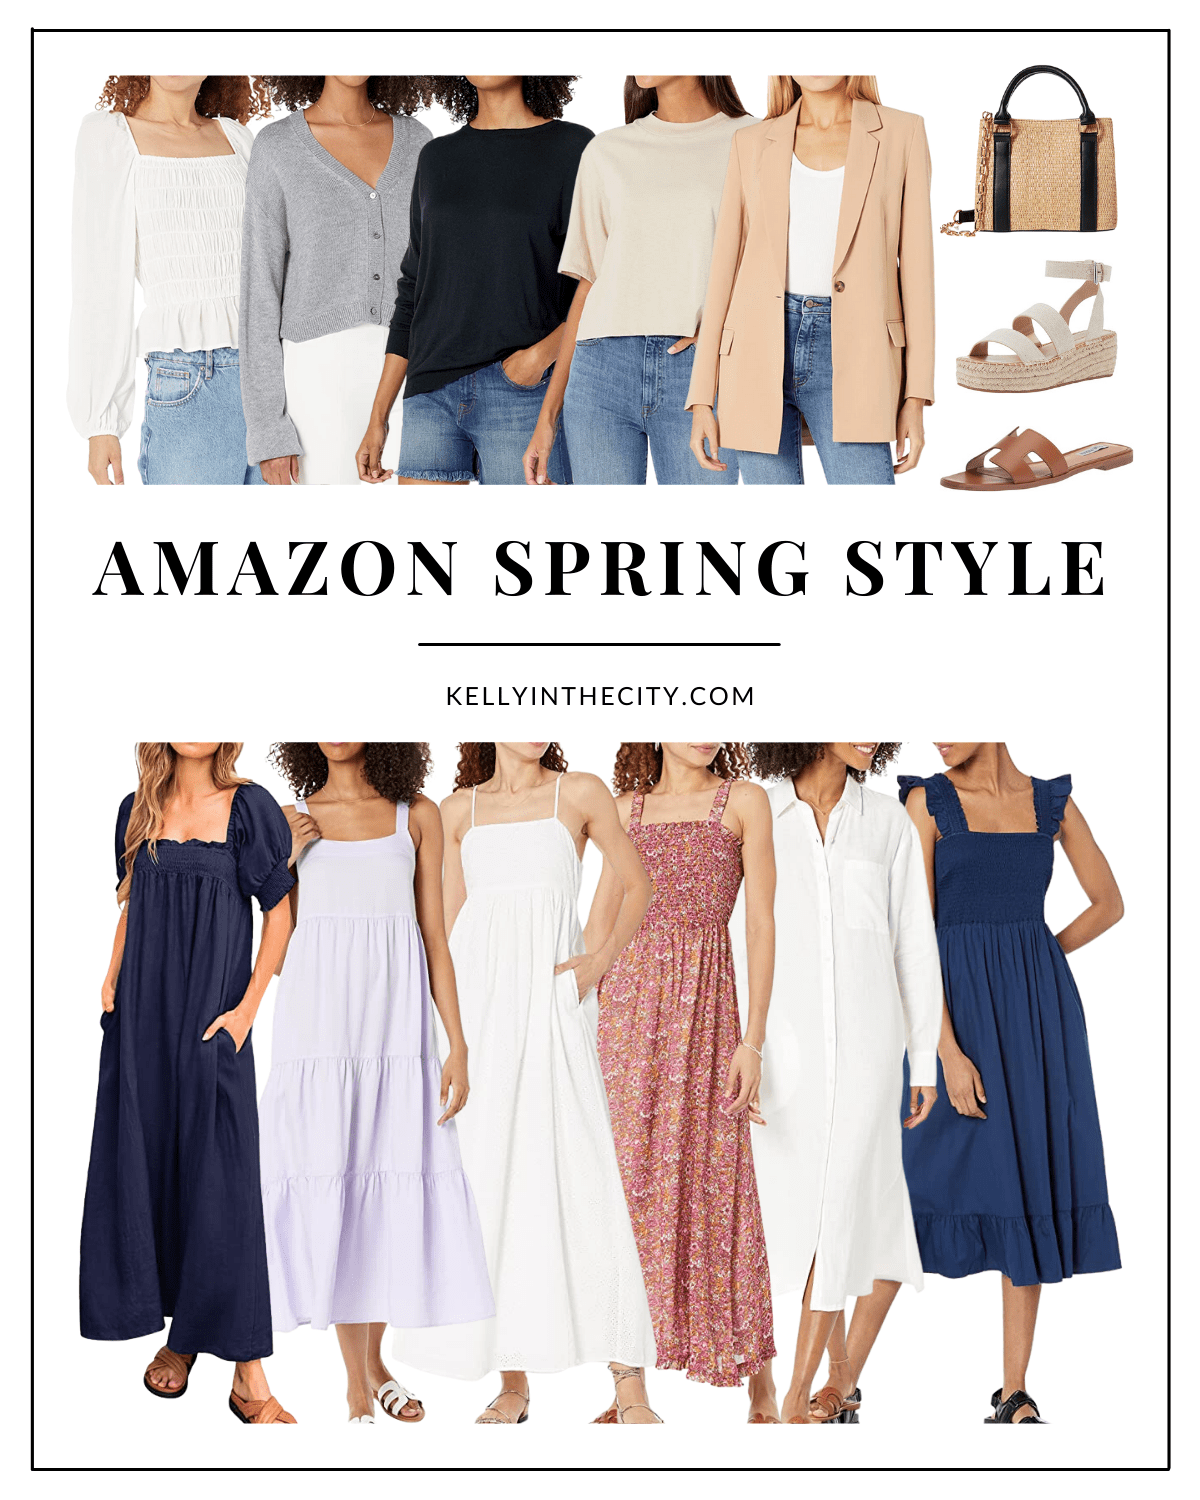 Amazon Spring Style Under $100